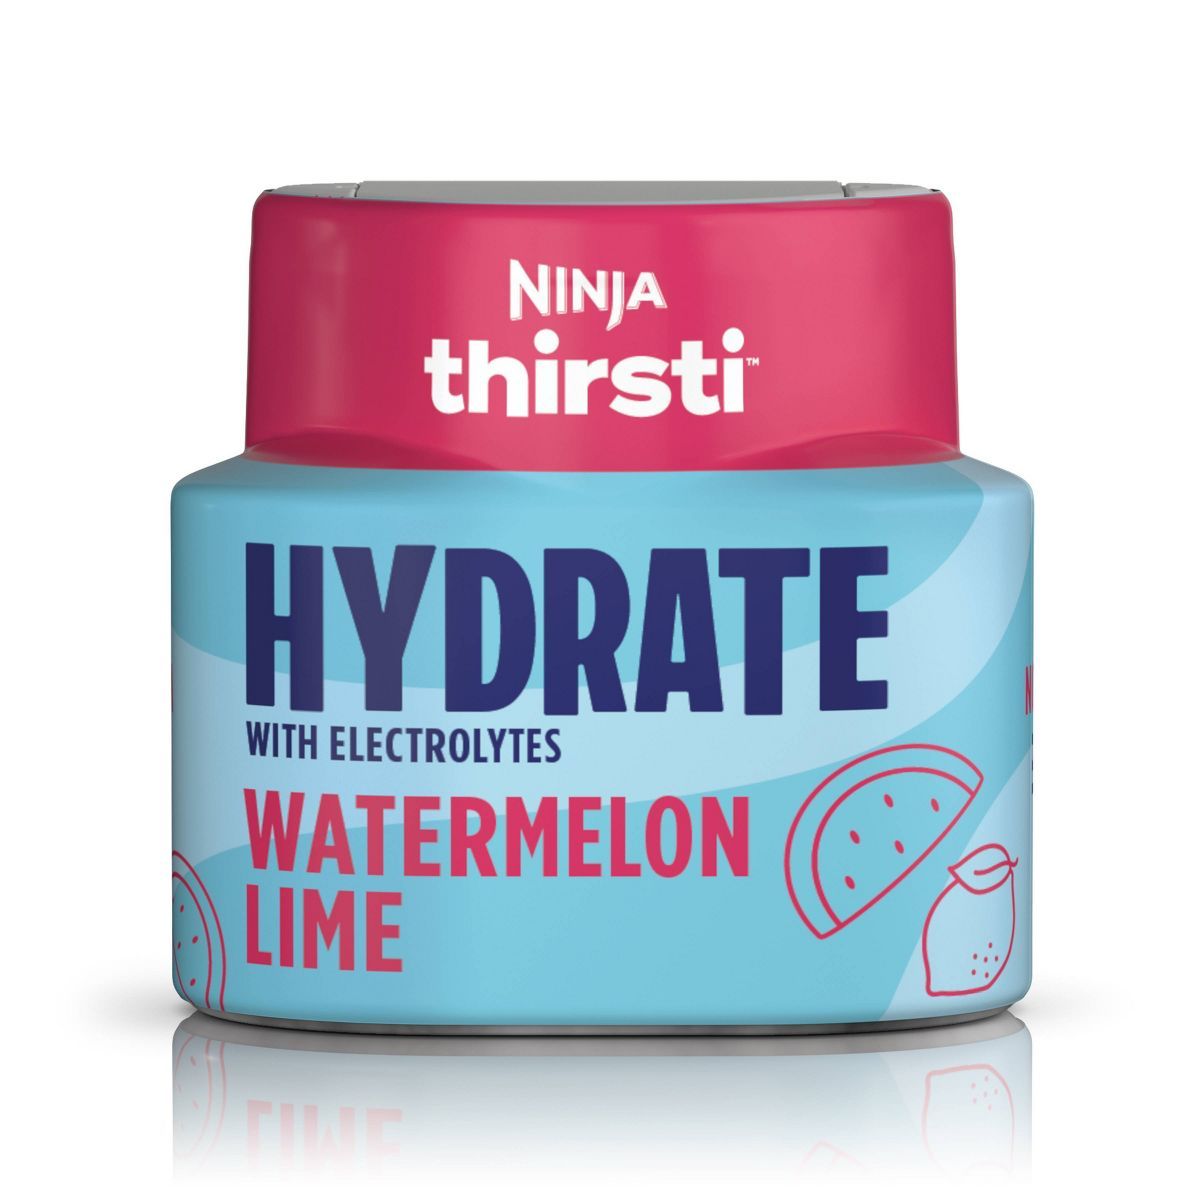 Ninja Thirsti HYDRATE Watermelon Lime Flavored Water Drops | Target